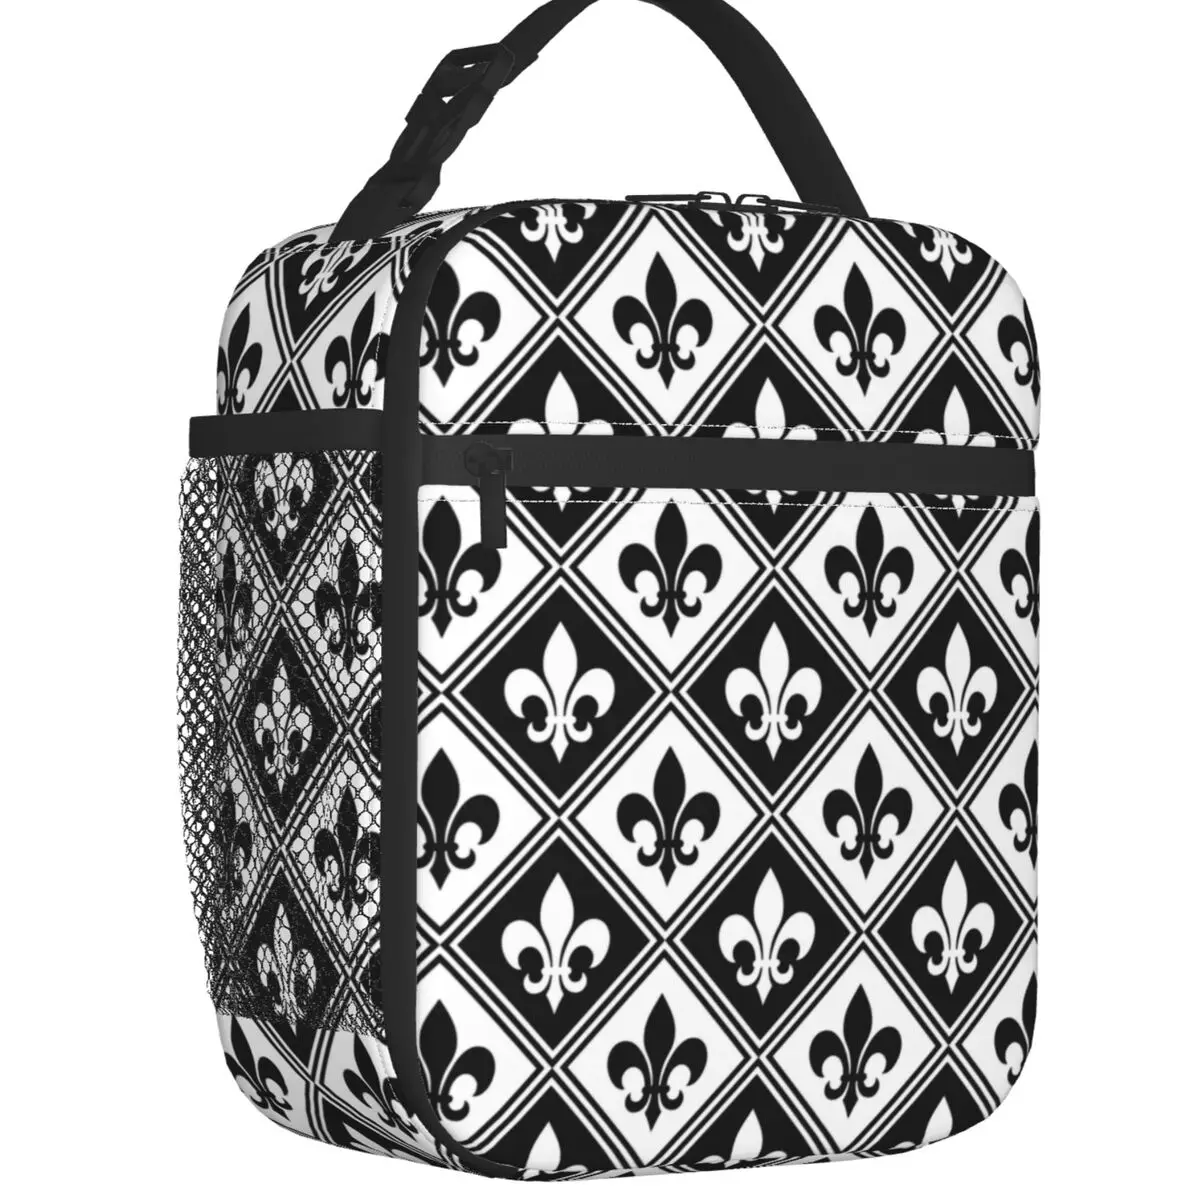 Black Fleur De Lis Lily Flower Diamond Pattern Insulated Lunch Bags for Work School Thermal Cooler Bento Box Women Children